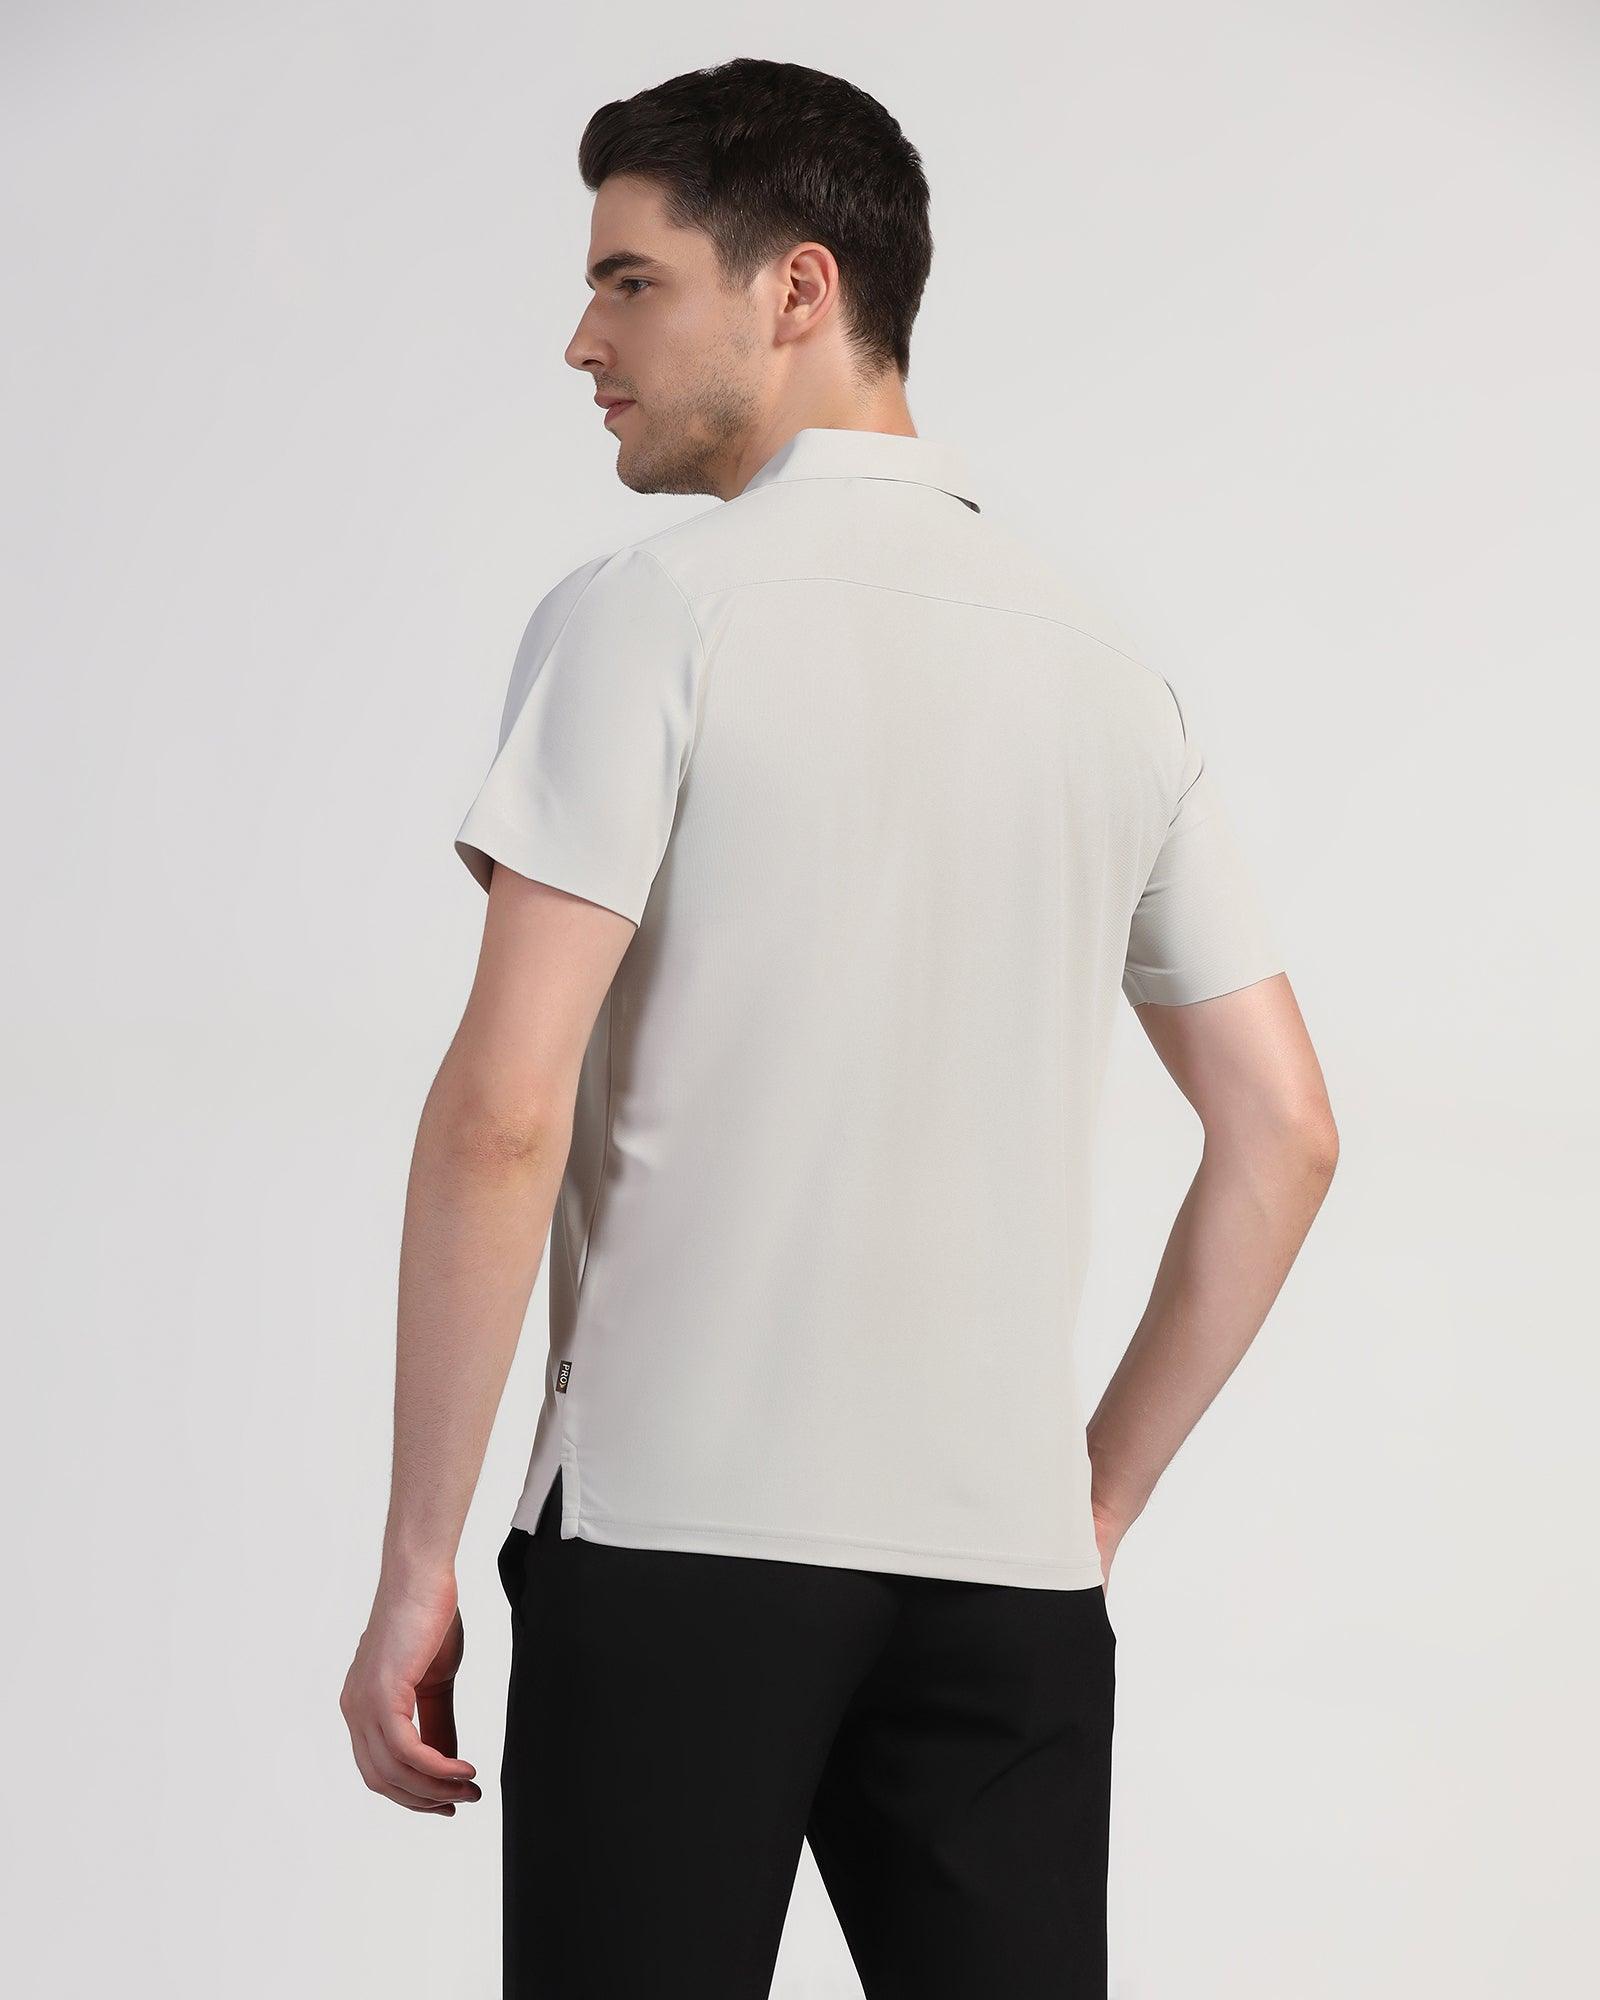 TechPro Polo Light Grey Solid T-Shirt - Bran